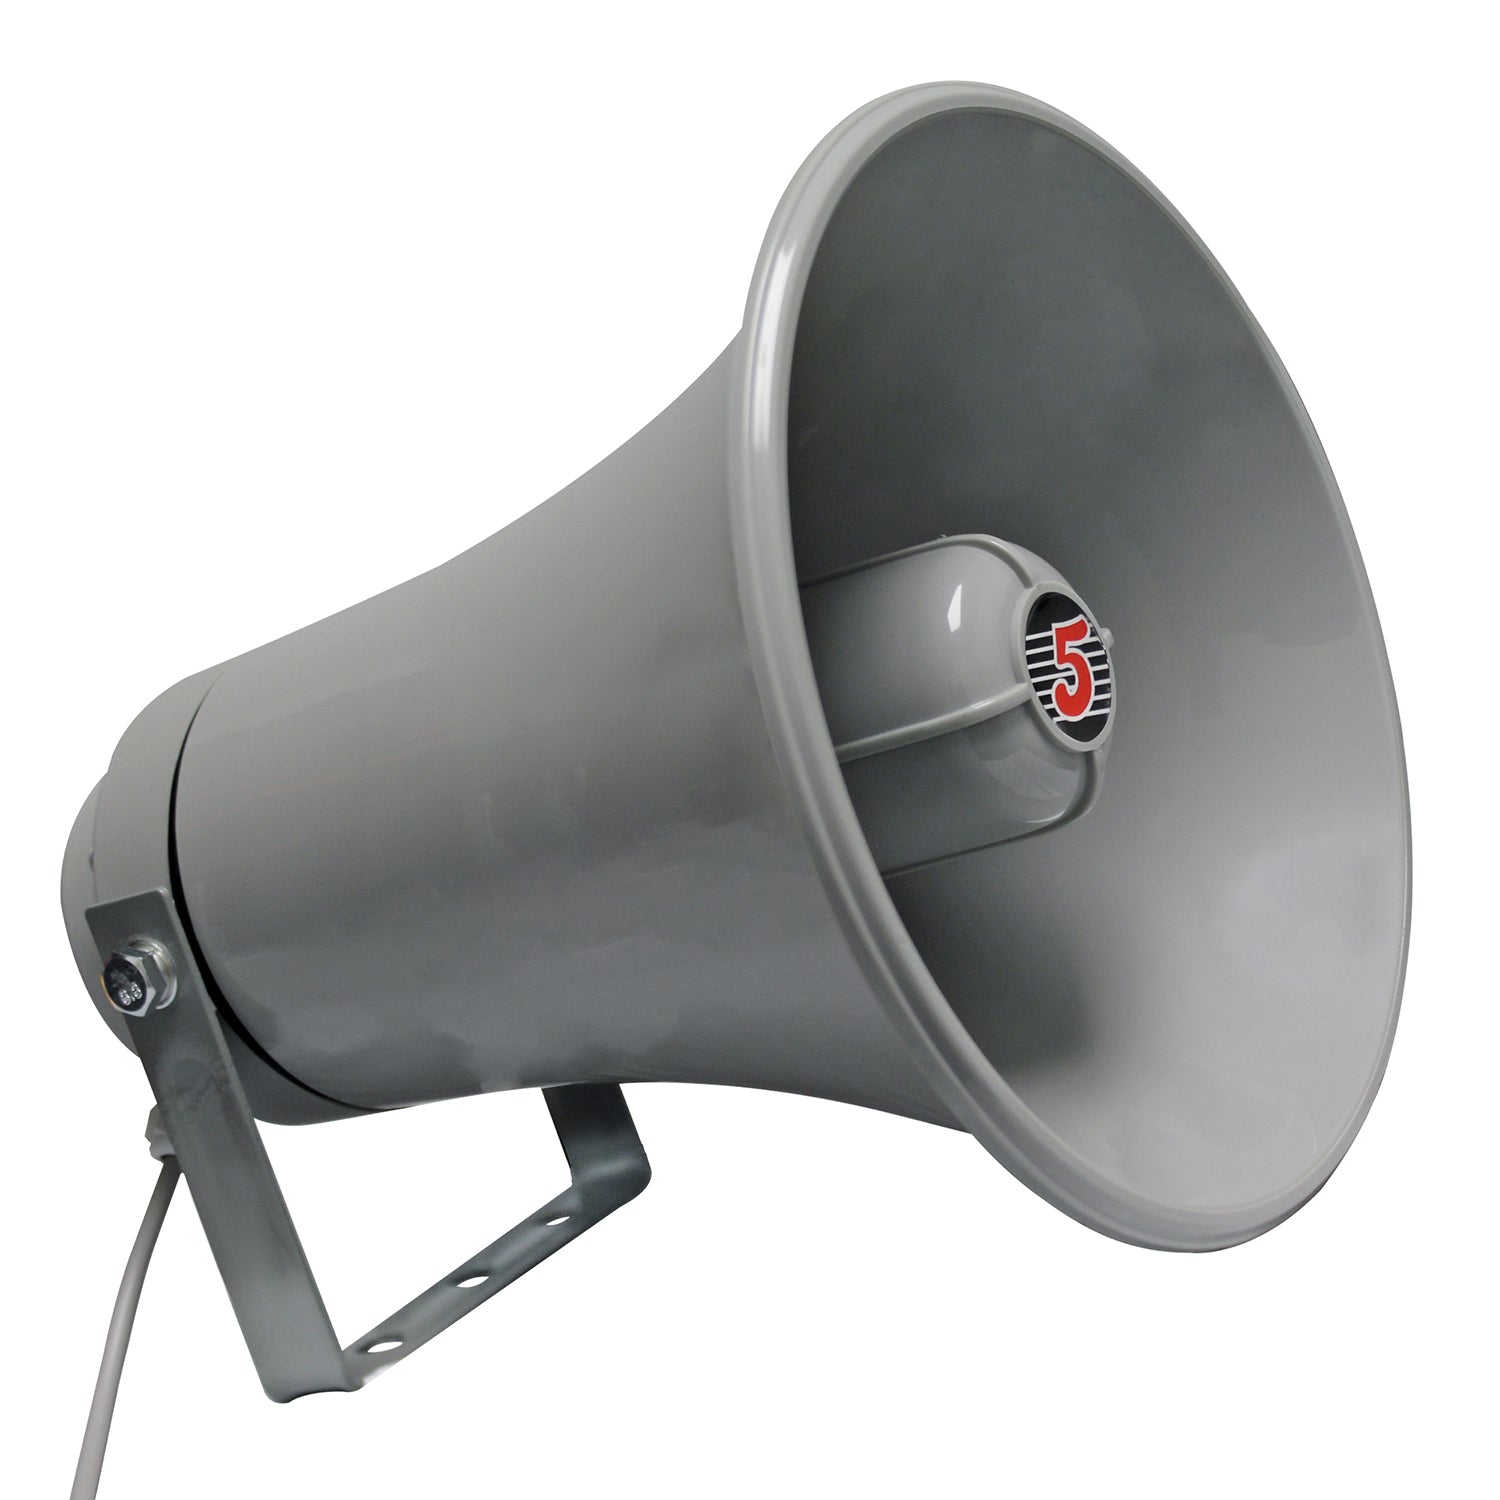 5 Core PA Horn Speaker Outdoor 9 x 11" Loudspeaker 20W RMS 8Ohm Horn Loud Sound Driver 1/2/4 Pc